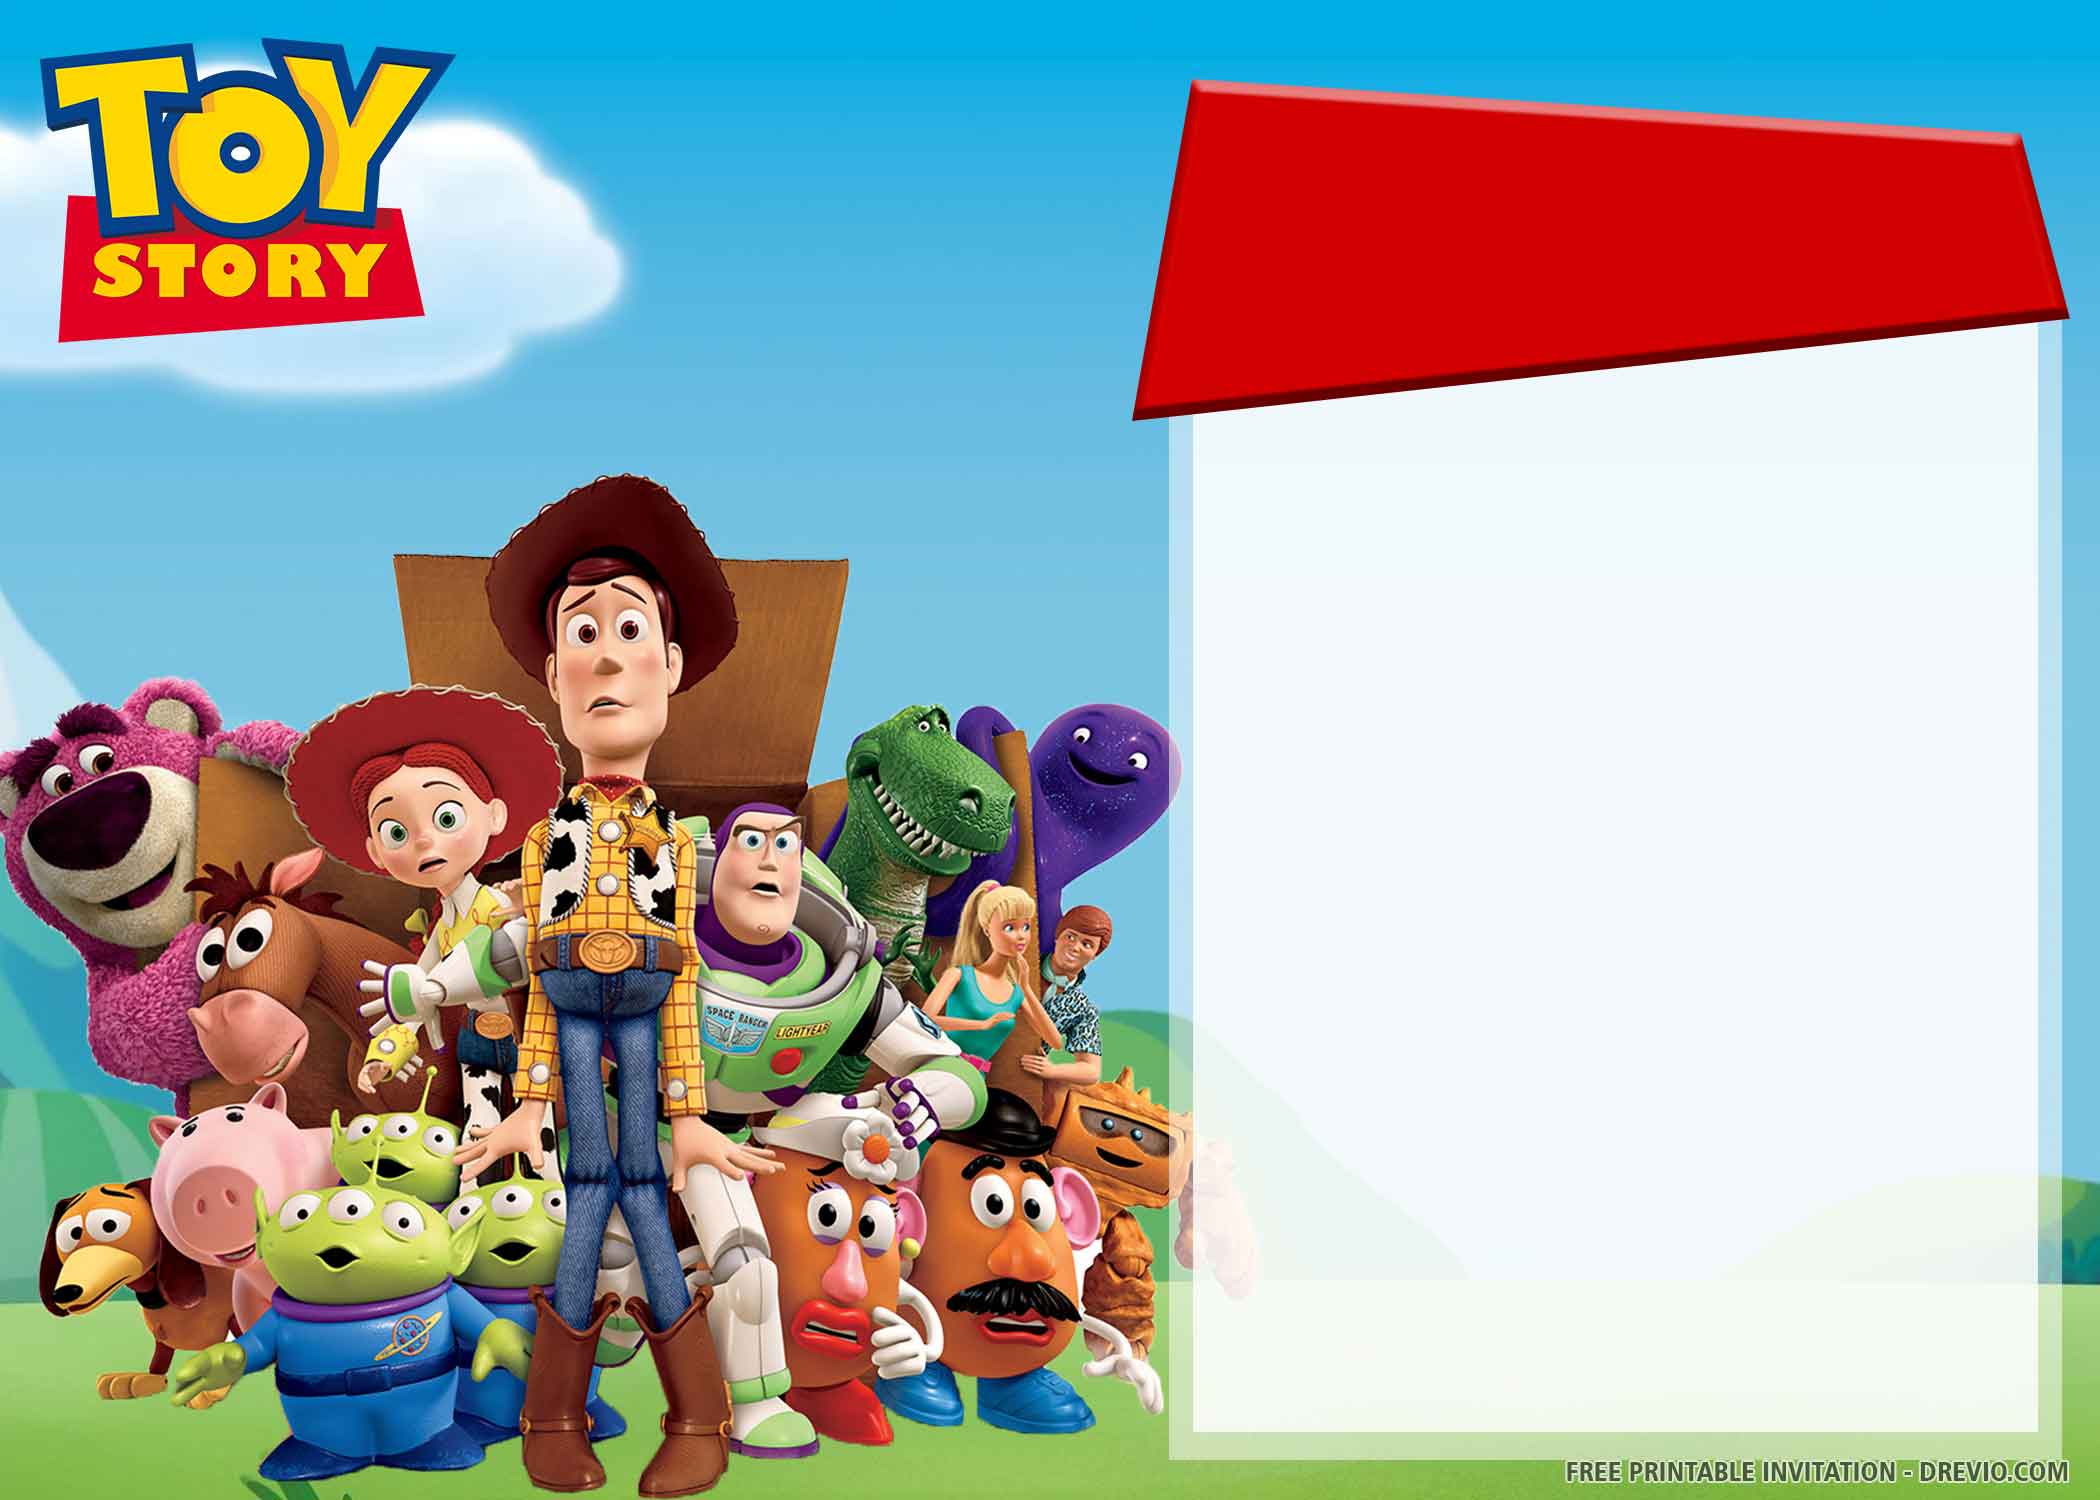 Free Printable Toy Story 3 Birthday Invitation Templates Download Hundreds Free Printable Birthday Invitation Templates